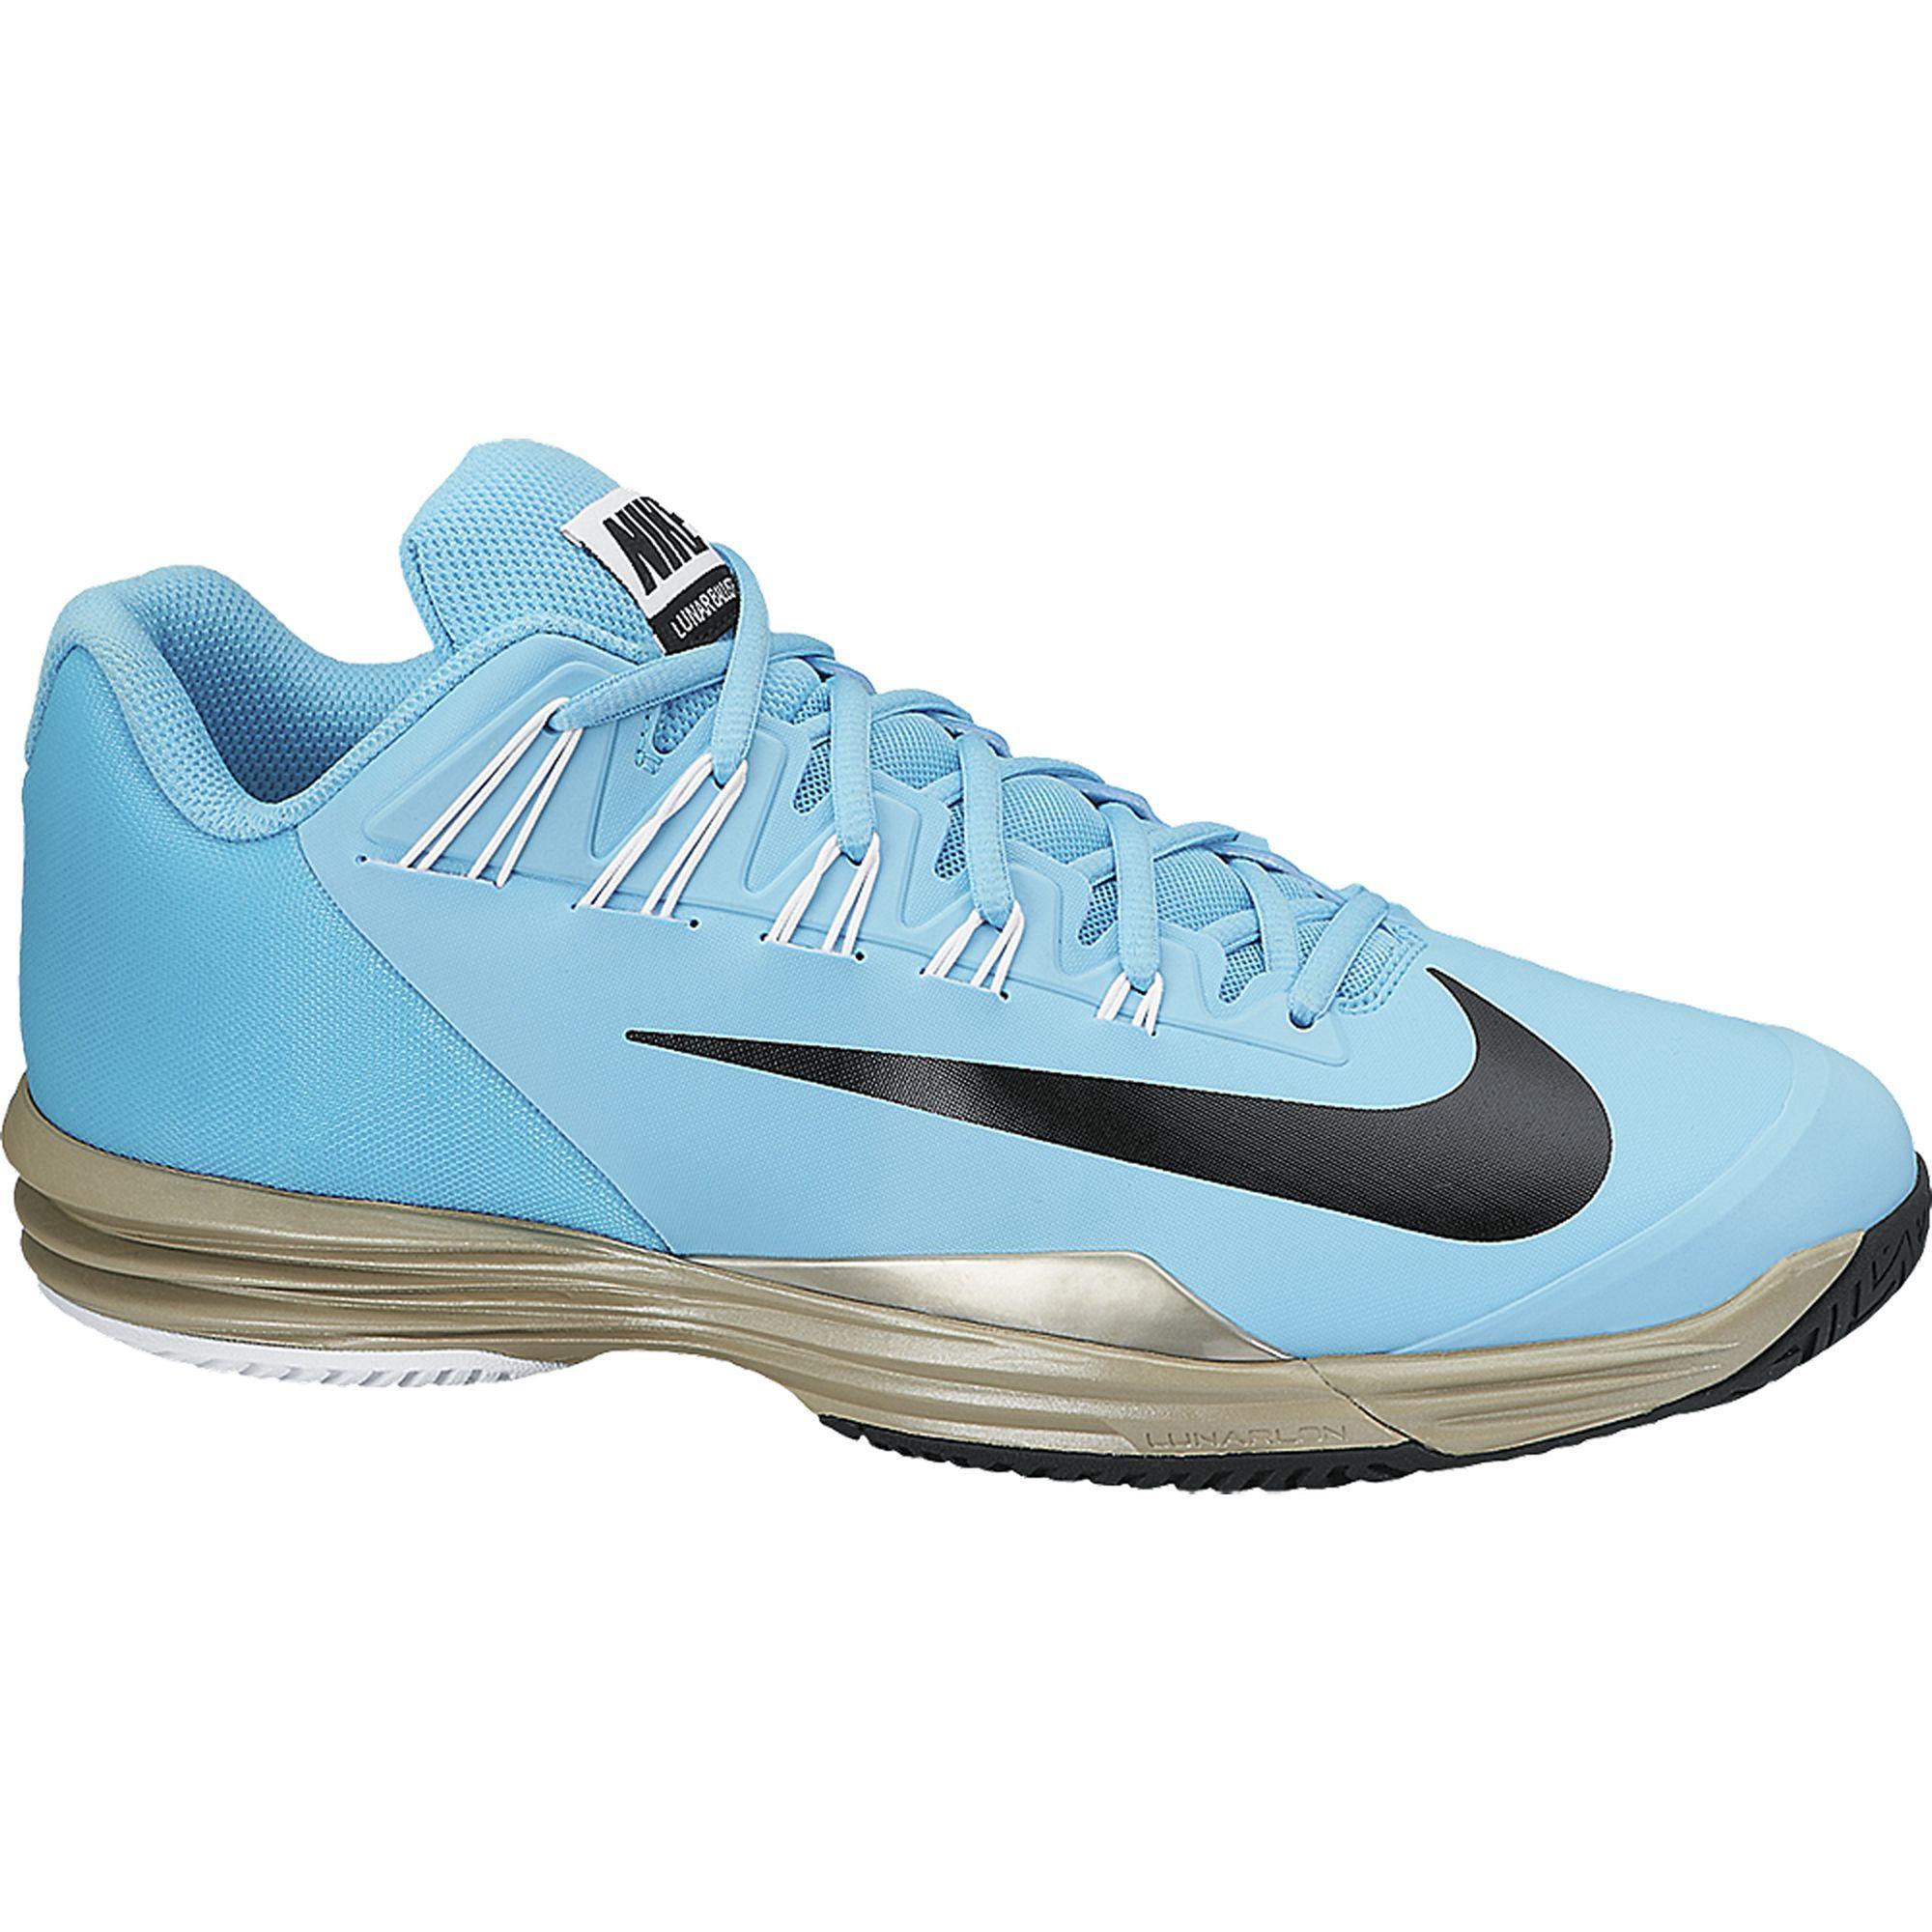 Nike Mens Lunar Ballistec Tennis Shoes - Polarised Blue/Metallic Zinc -